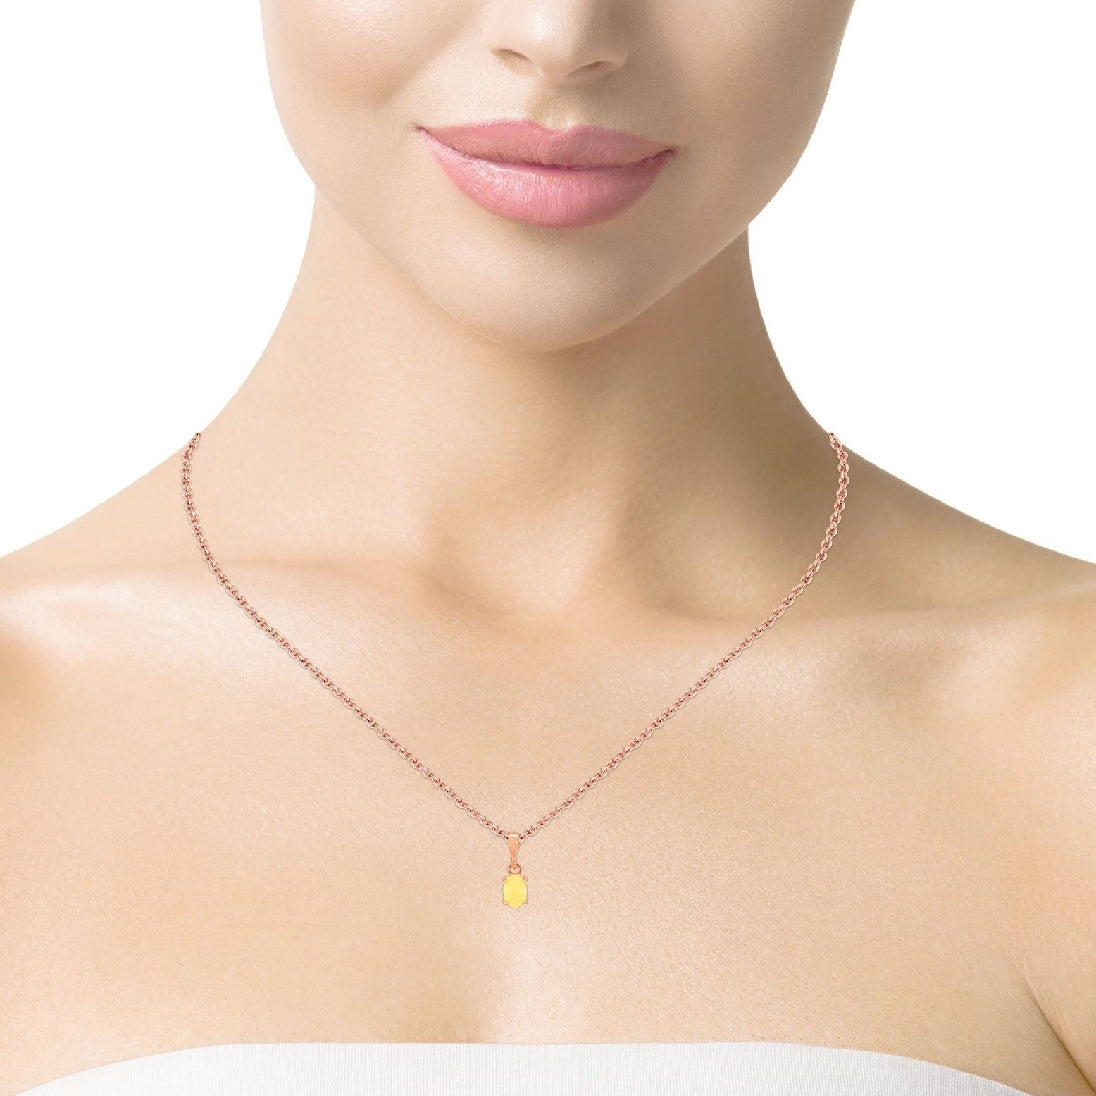 Rose Gold plated sterling silver 7x5mm White Opal necklace pendant - Masterpiece Jewellery Opal & Gems Sydney Australia | Online Shop